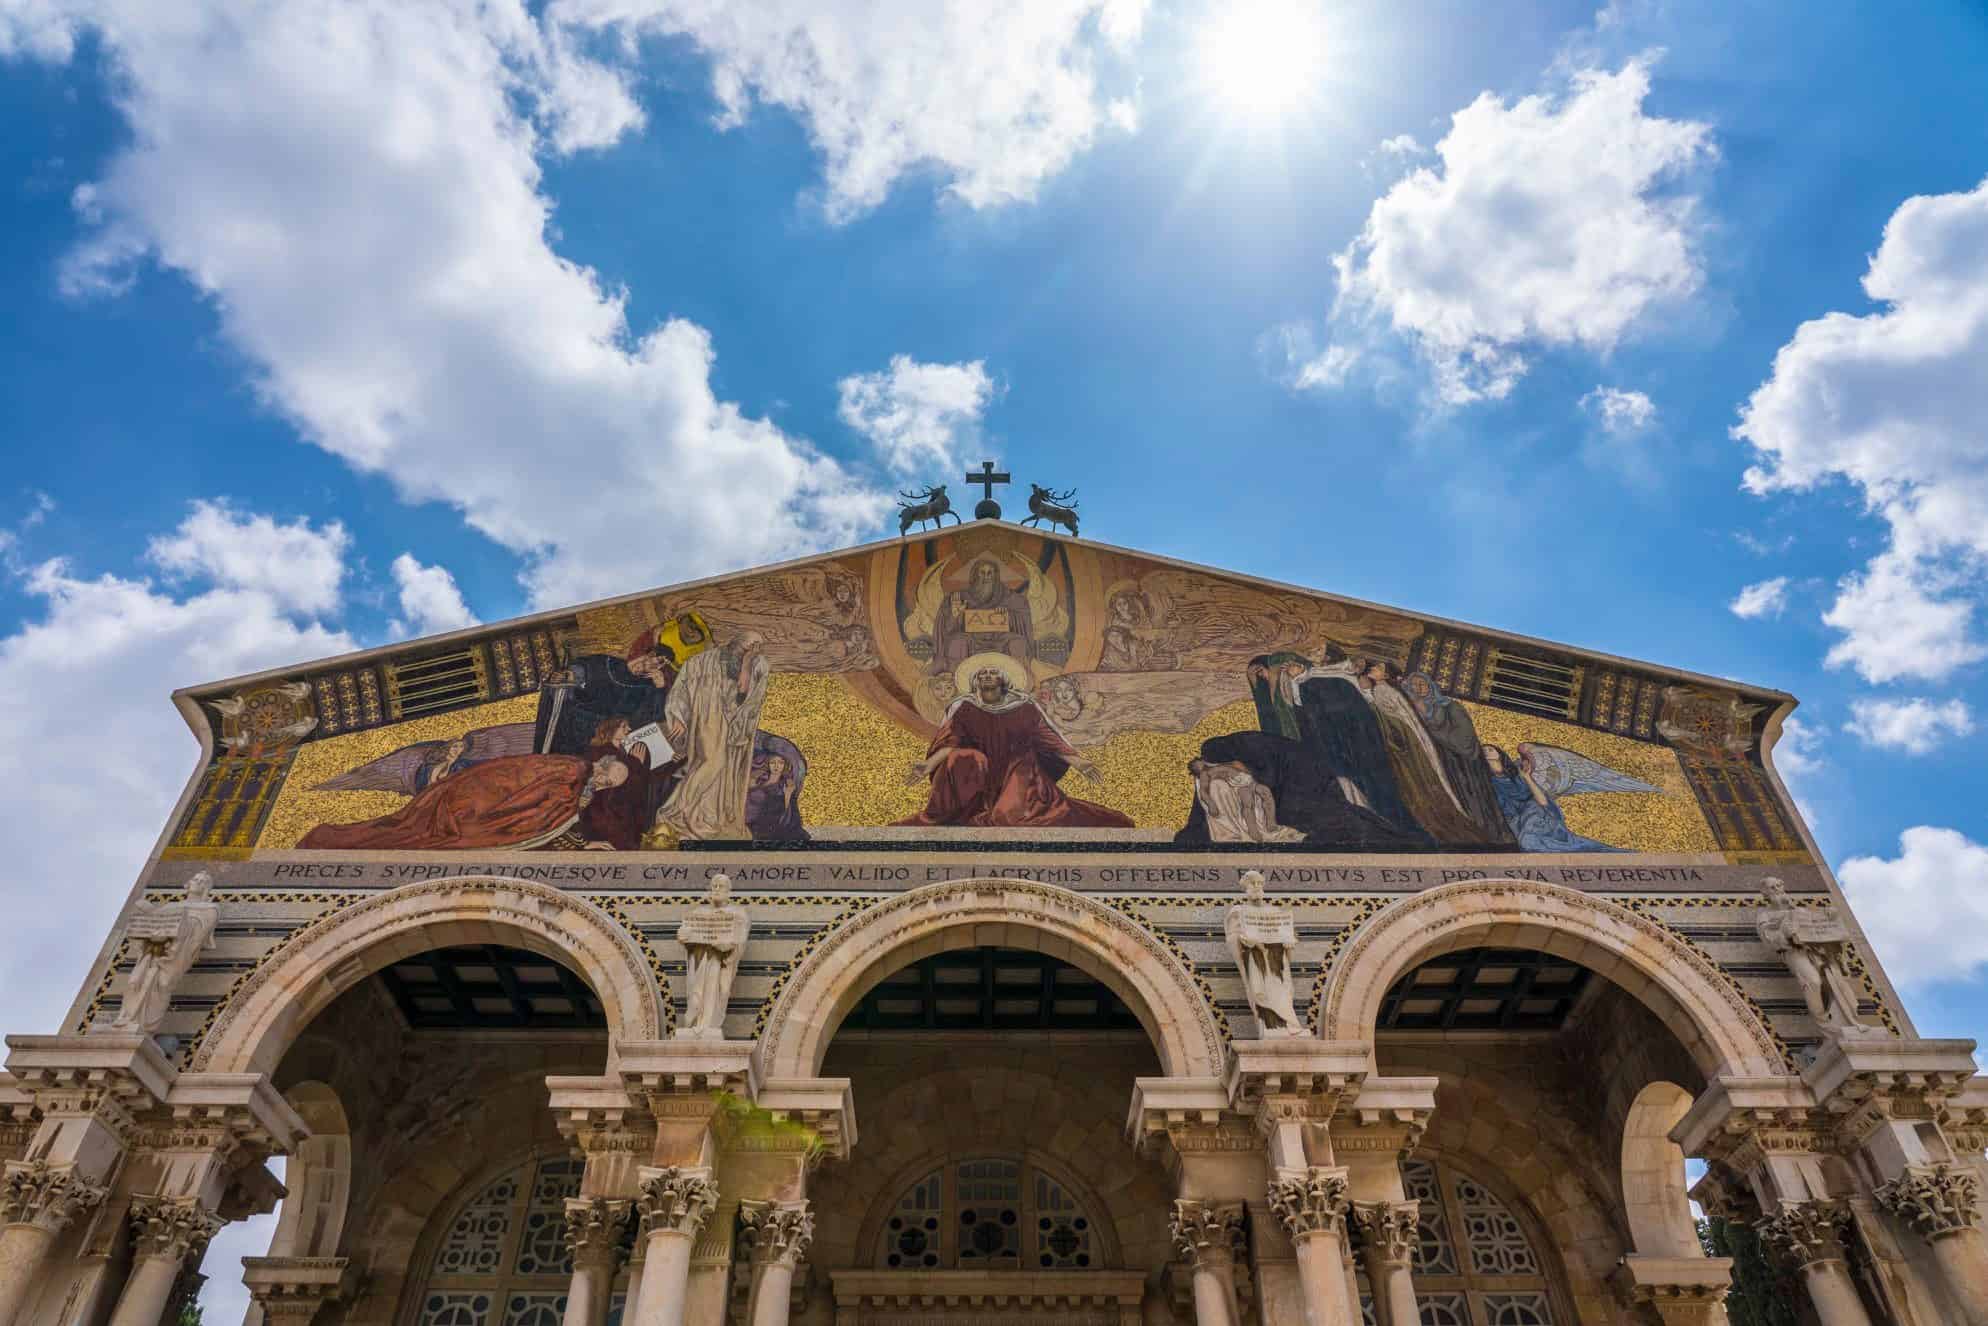 The Church of Gethsemane